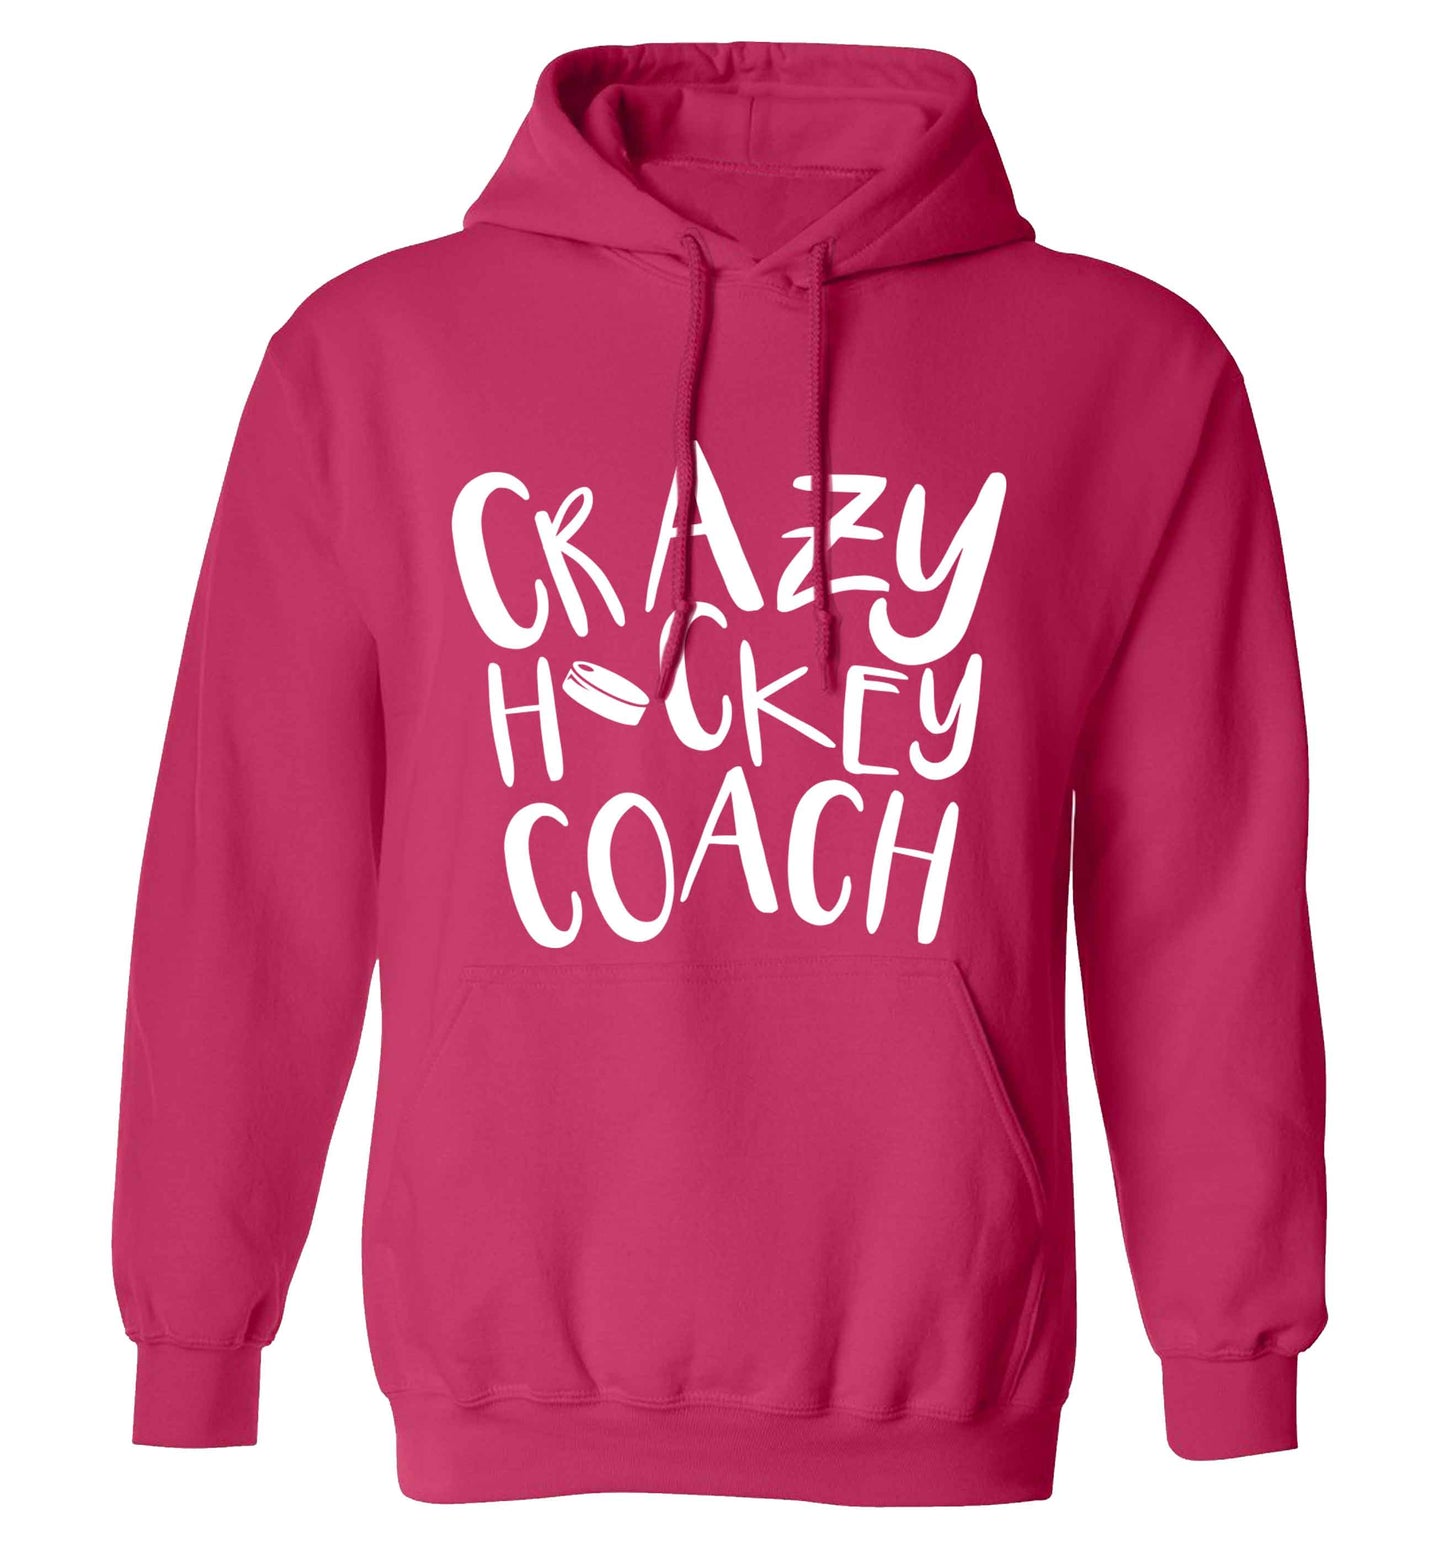 Crazy hockey coach adults unisex pink hoodie 2XL